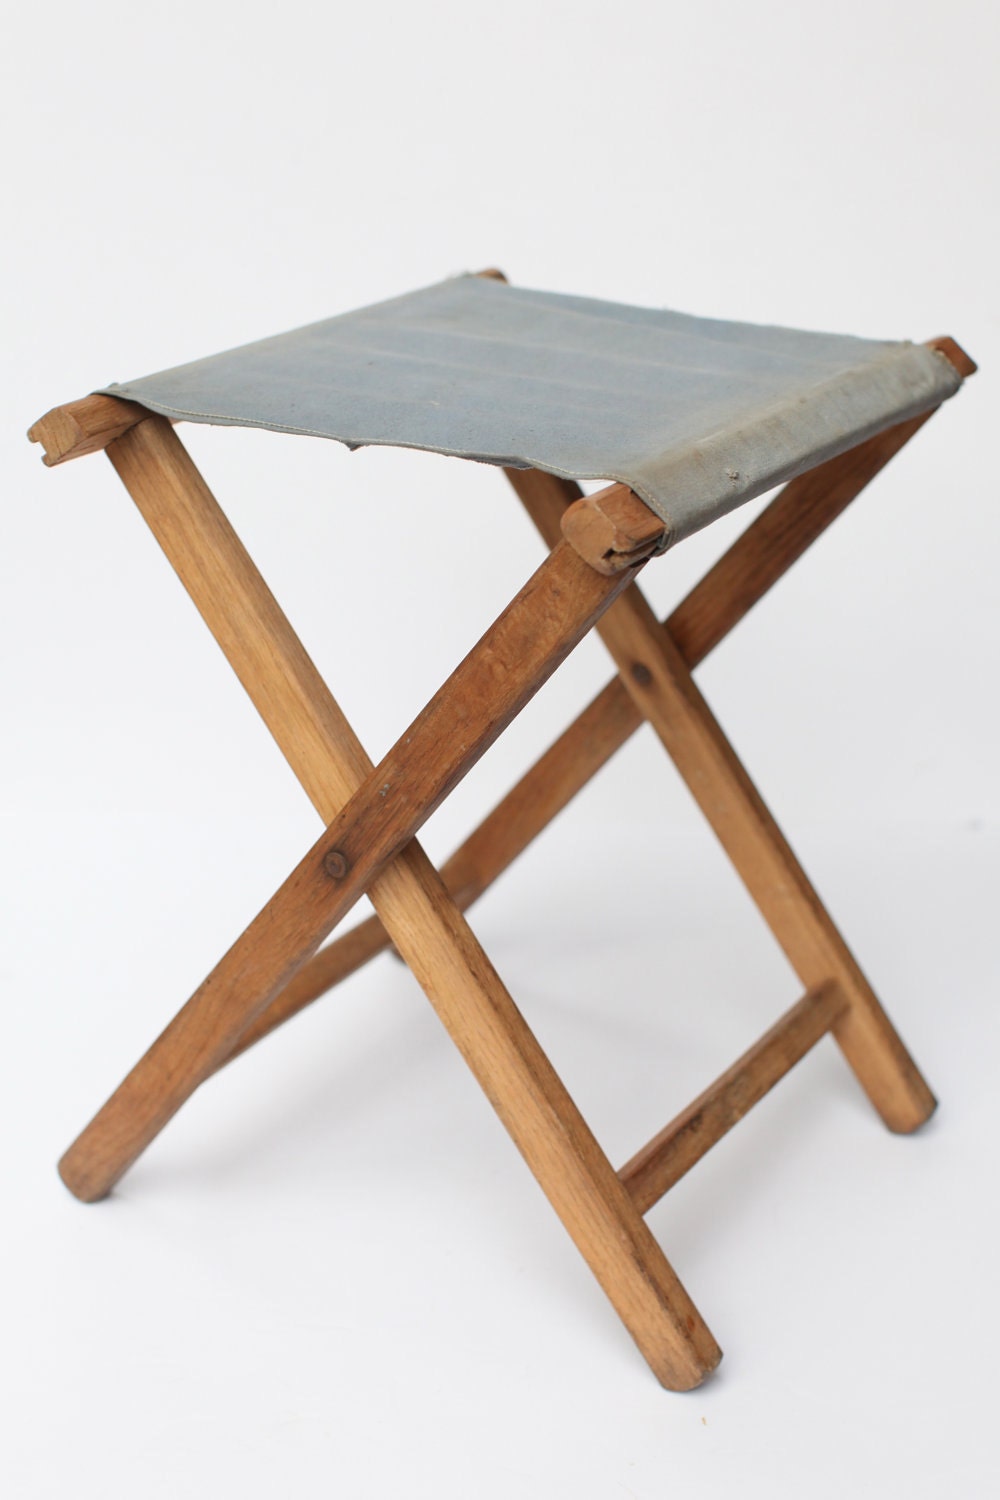 Wooden folding camp stool